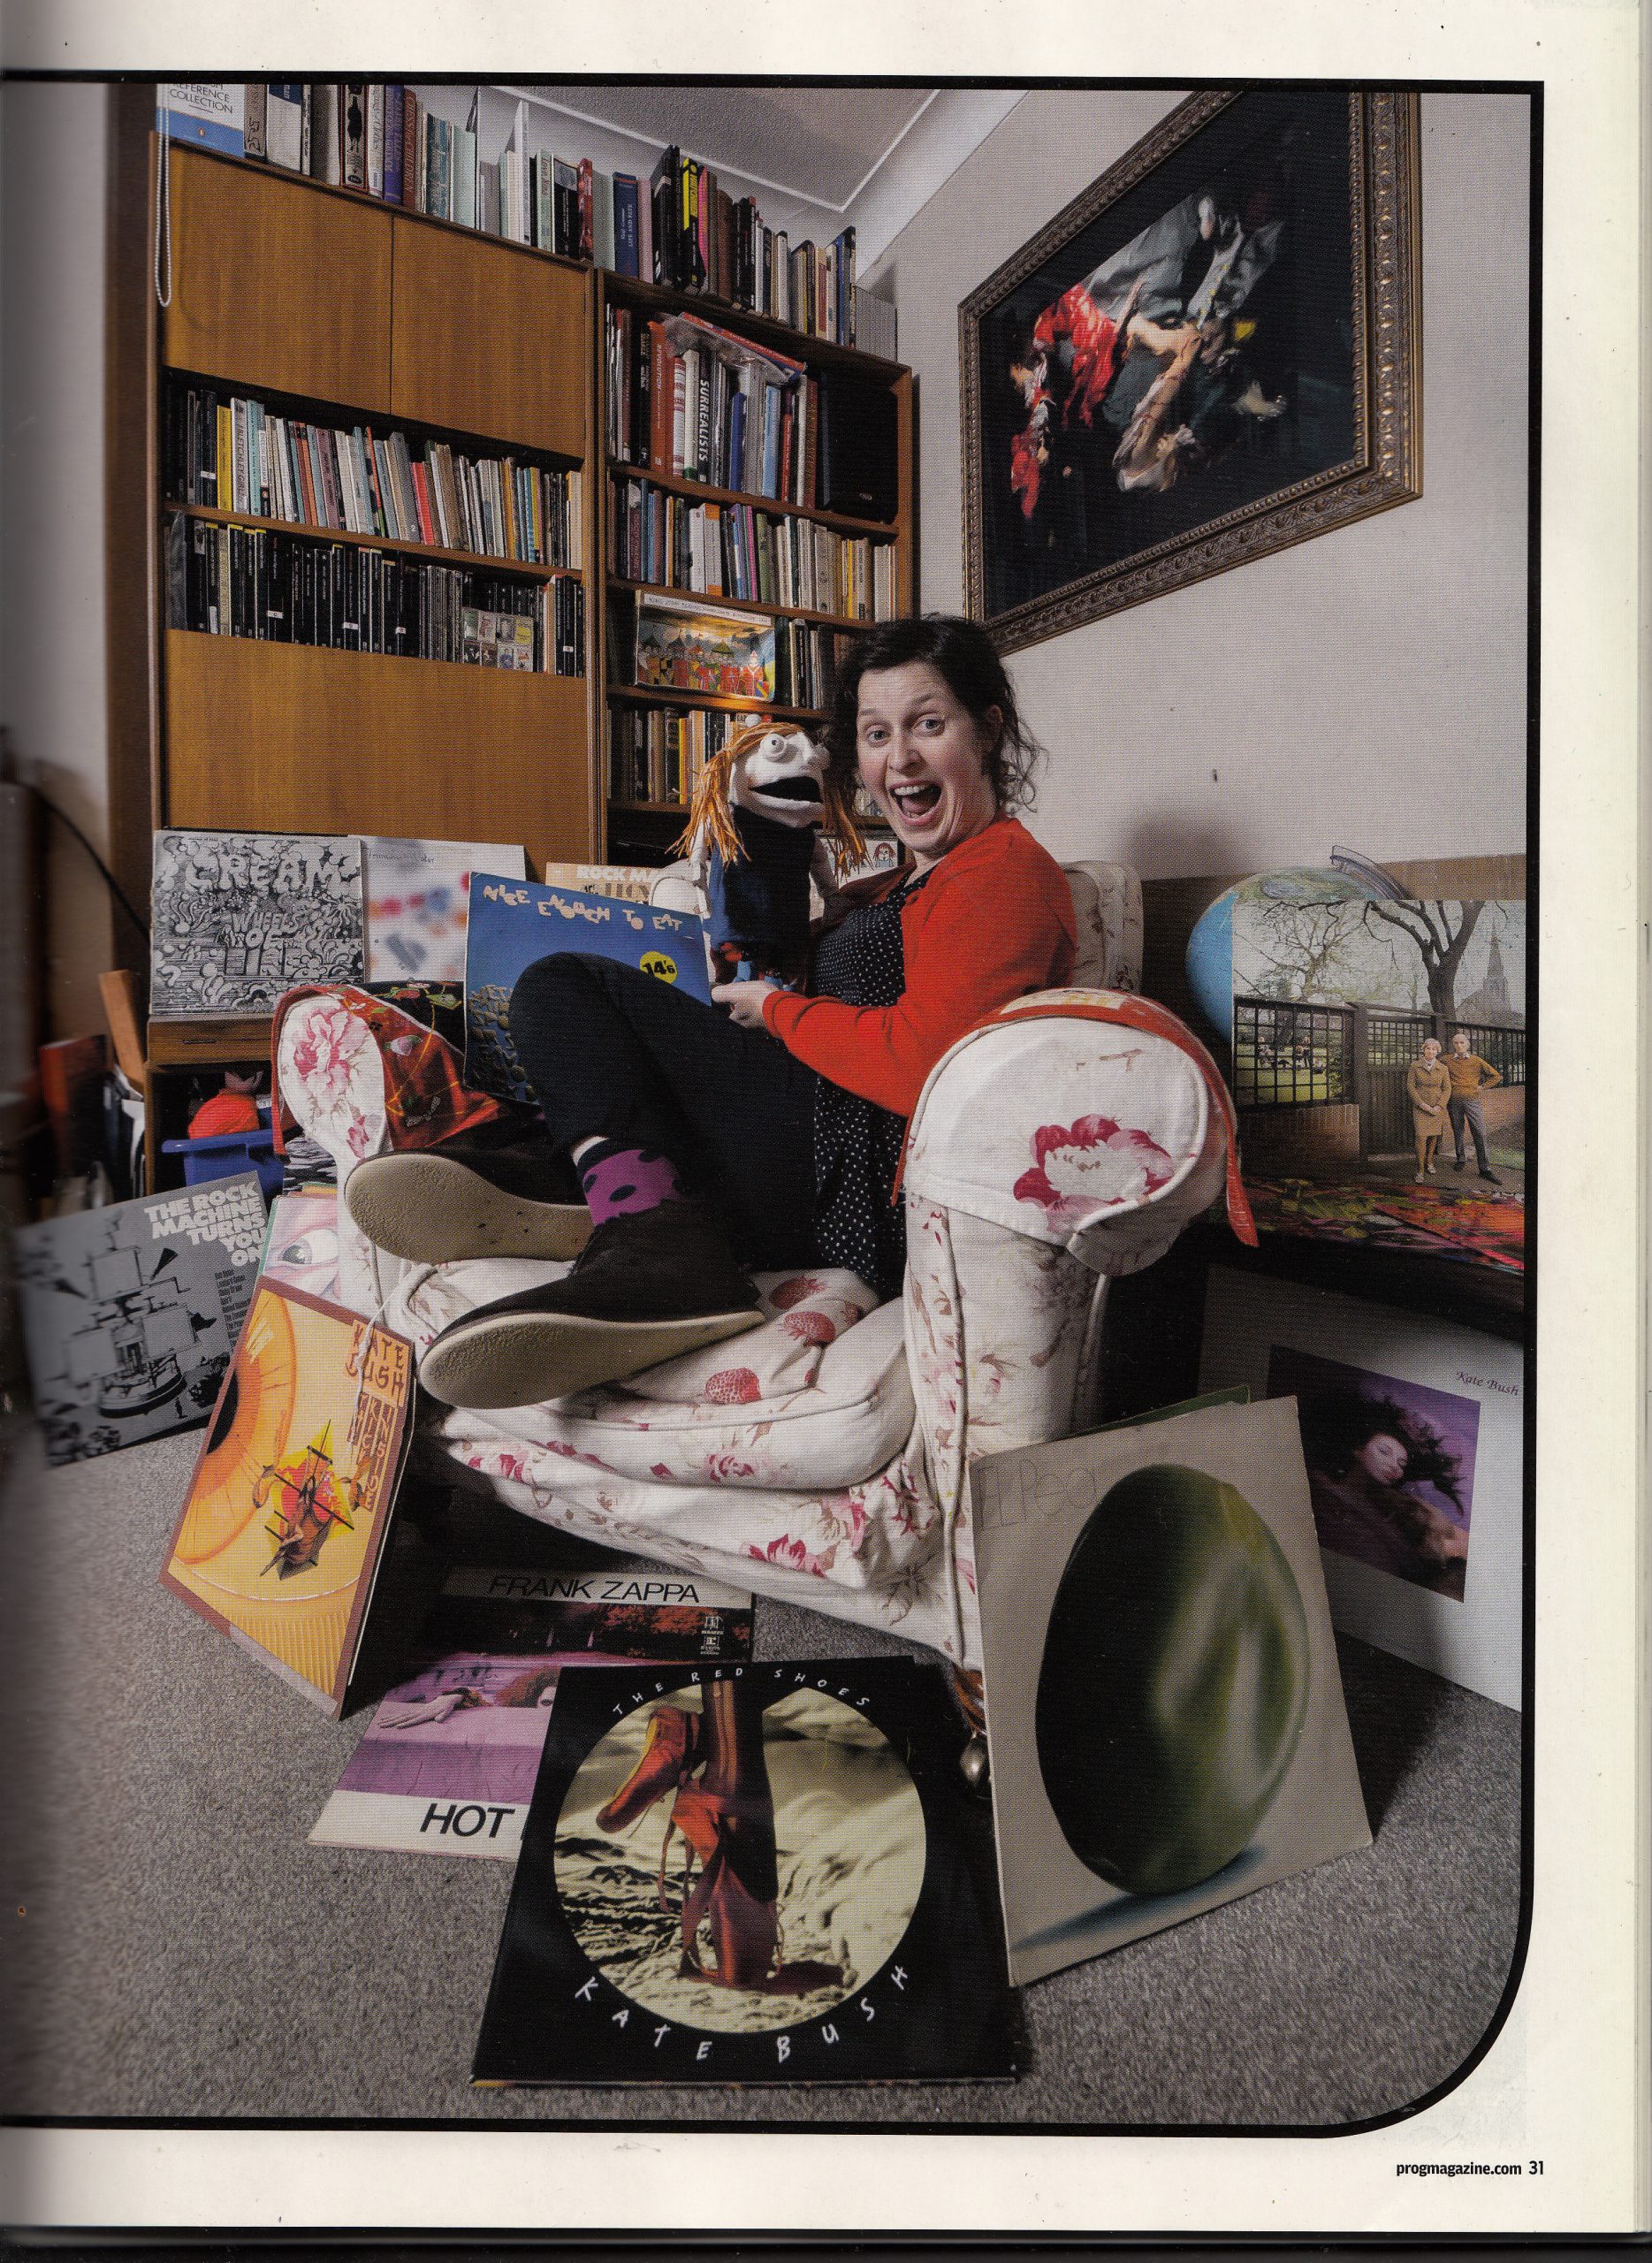 Prog Rock Magazine – My Record Collection